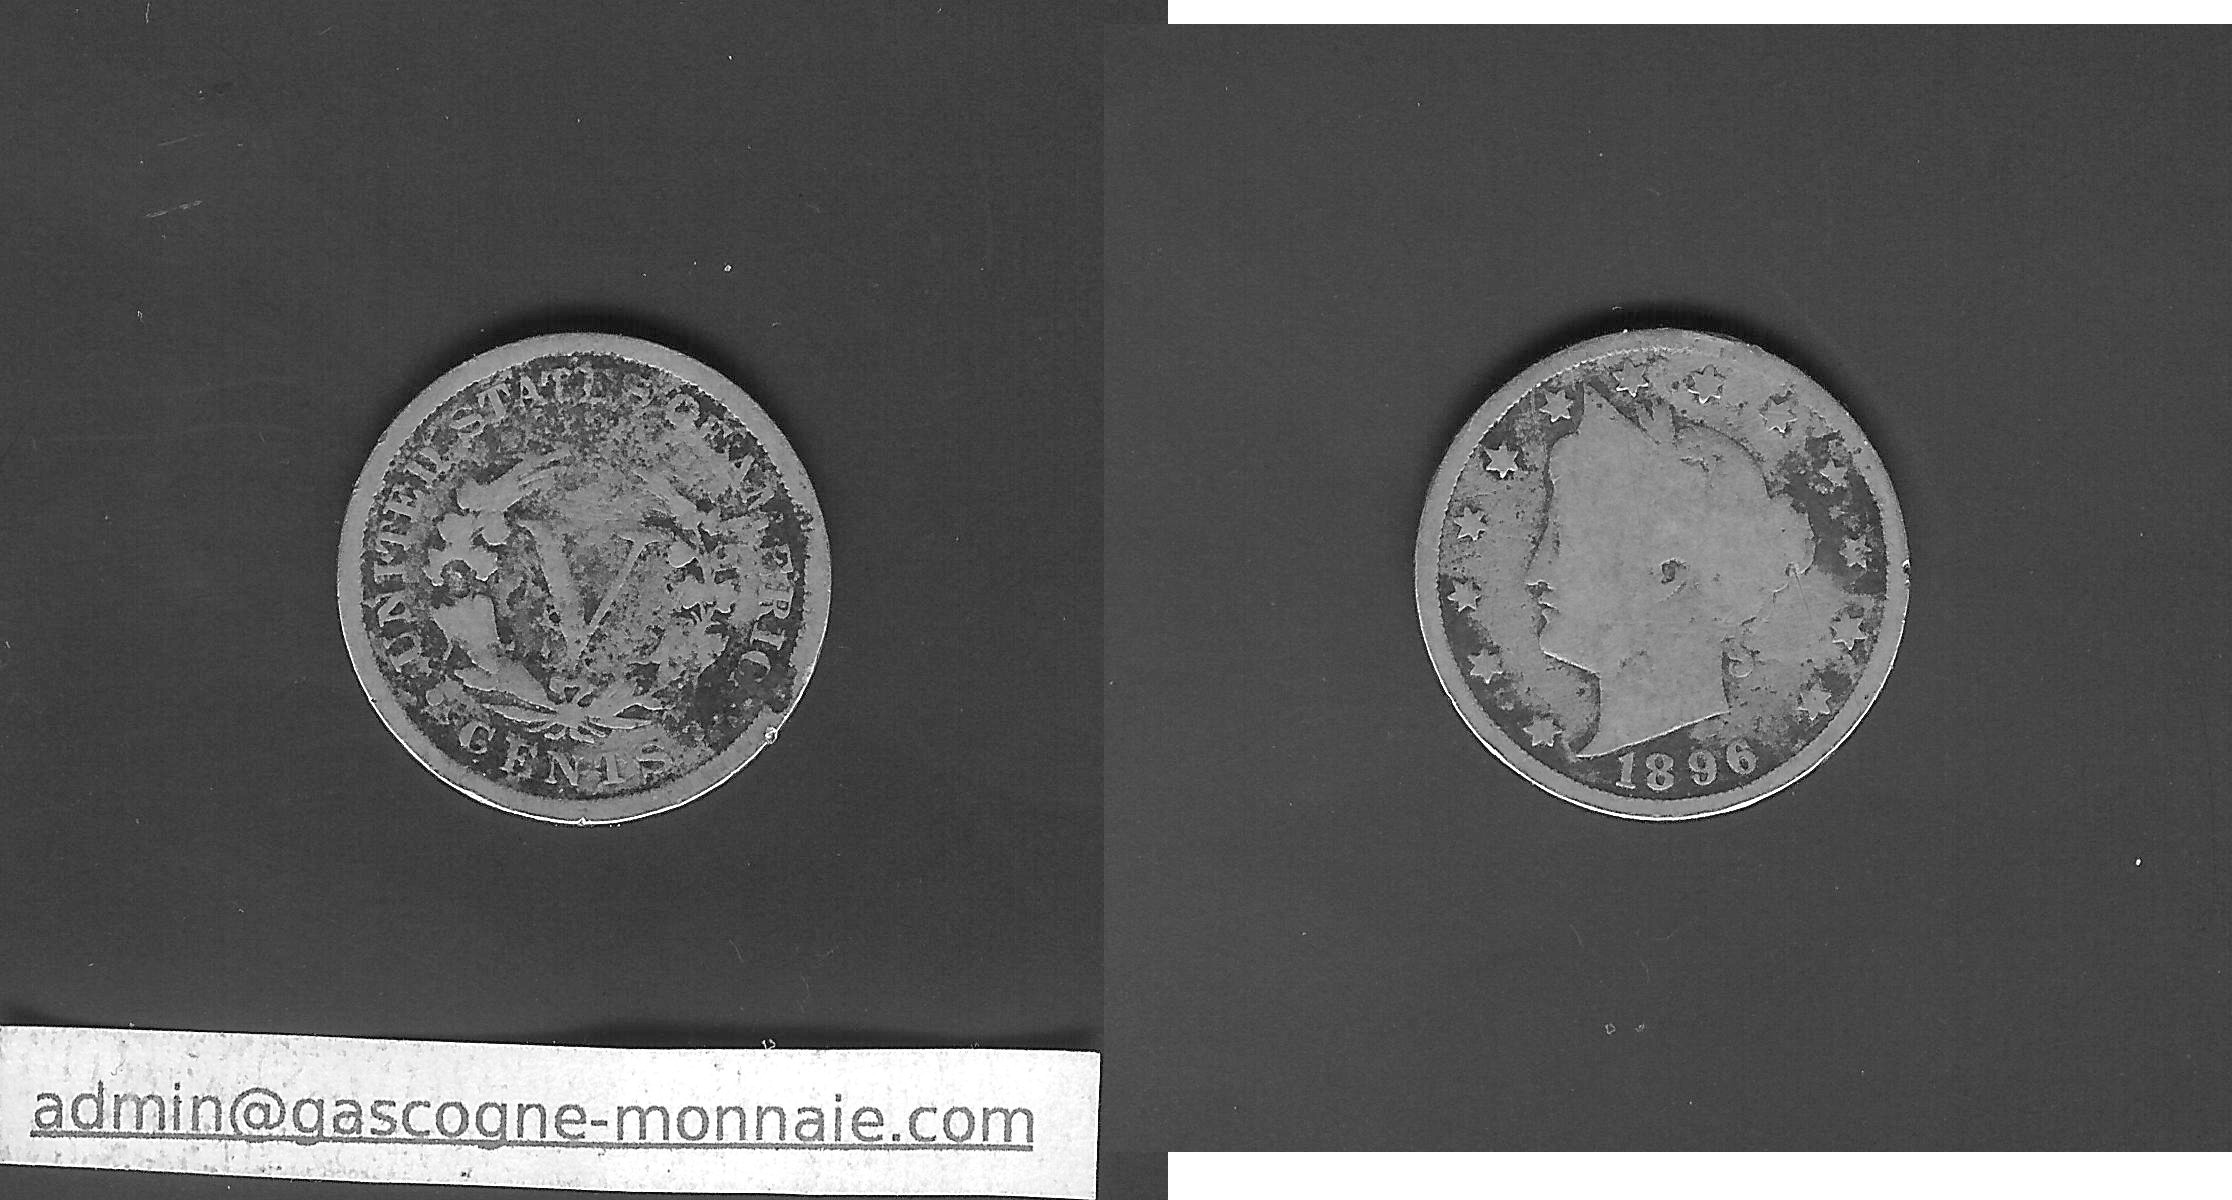 USA 5 cents Liberty 1896 aF